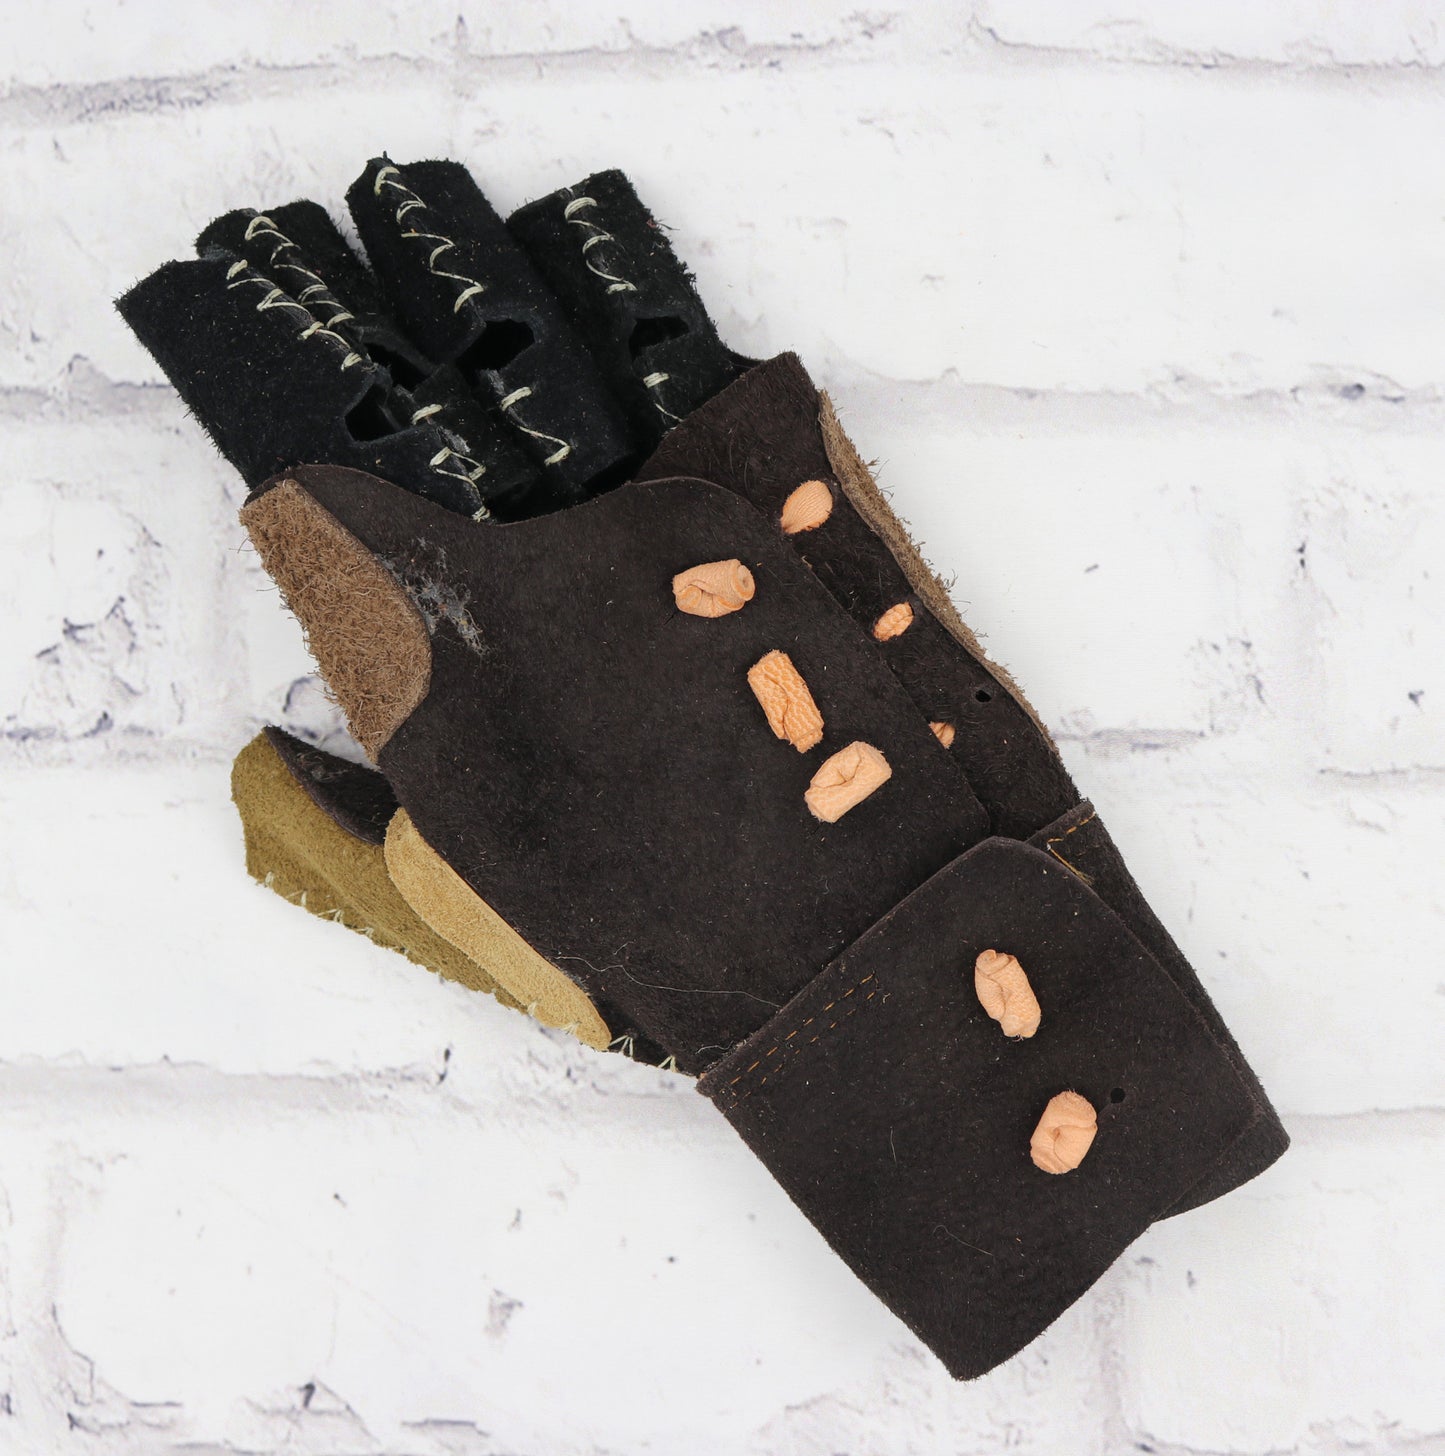 Charra Cafe Large (L) Manganas Charro Lienzo Leather Glove